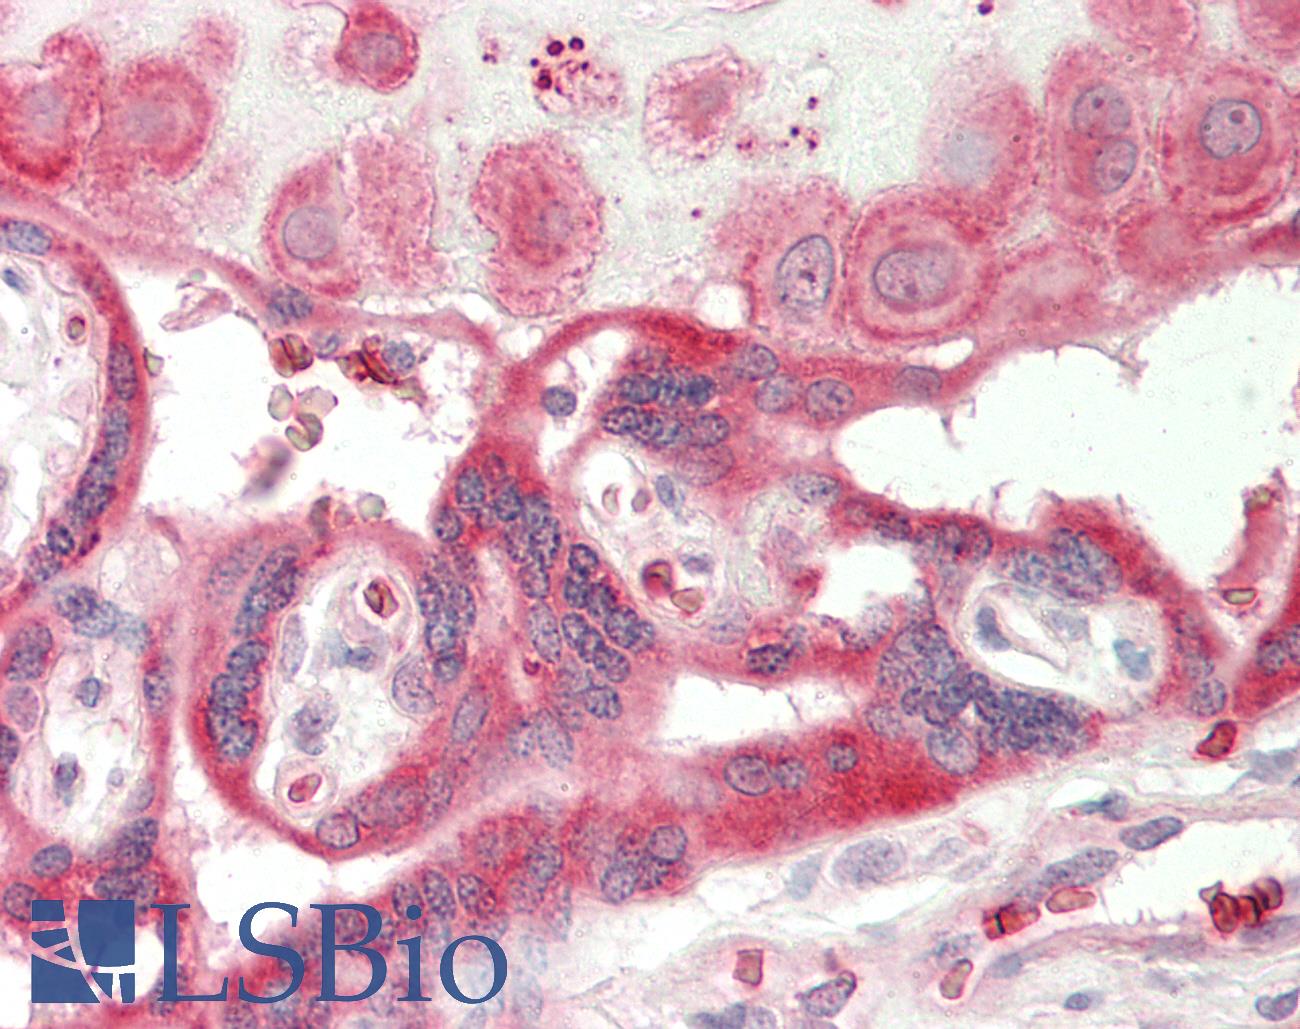 CECR1 Antibody - Human Placenta: Formalin-Fixed, Paraffin-Embedded (FFPE)